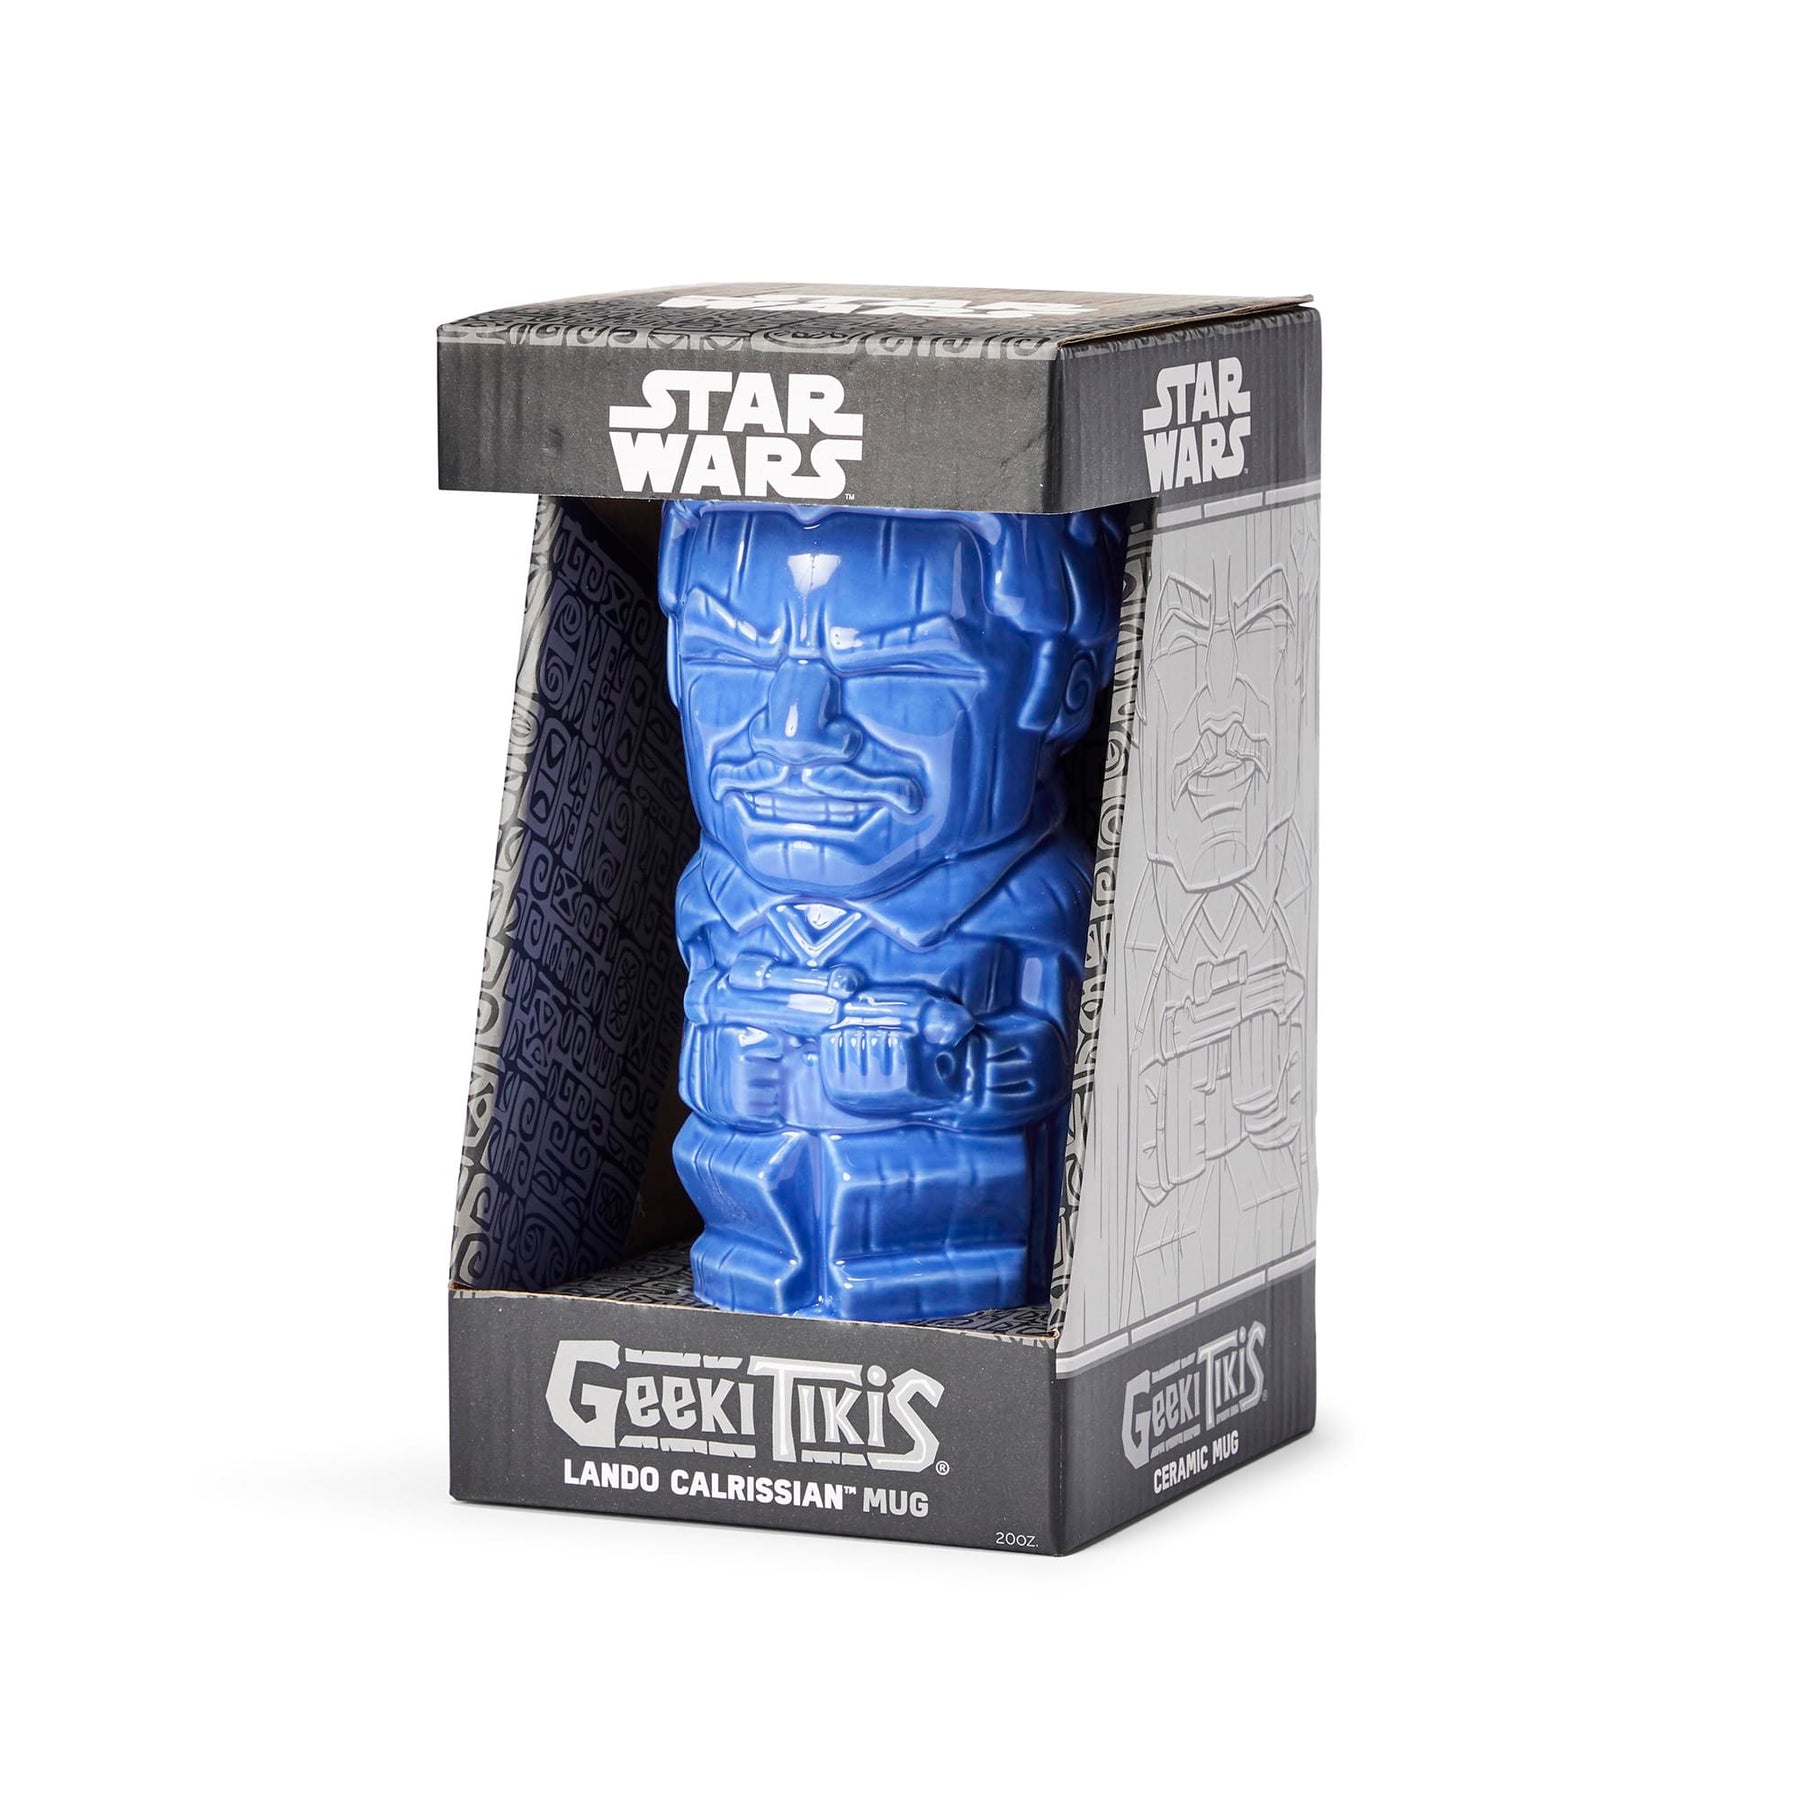 Geeki Tikis Star Wars Lando Calrissian Ceramic Mug | Holds 20 Ounces